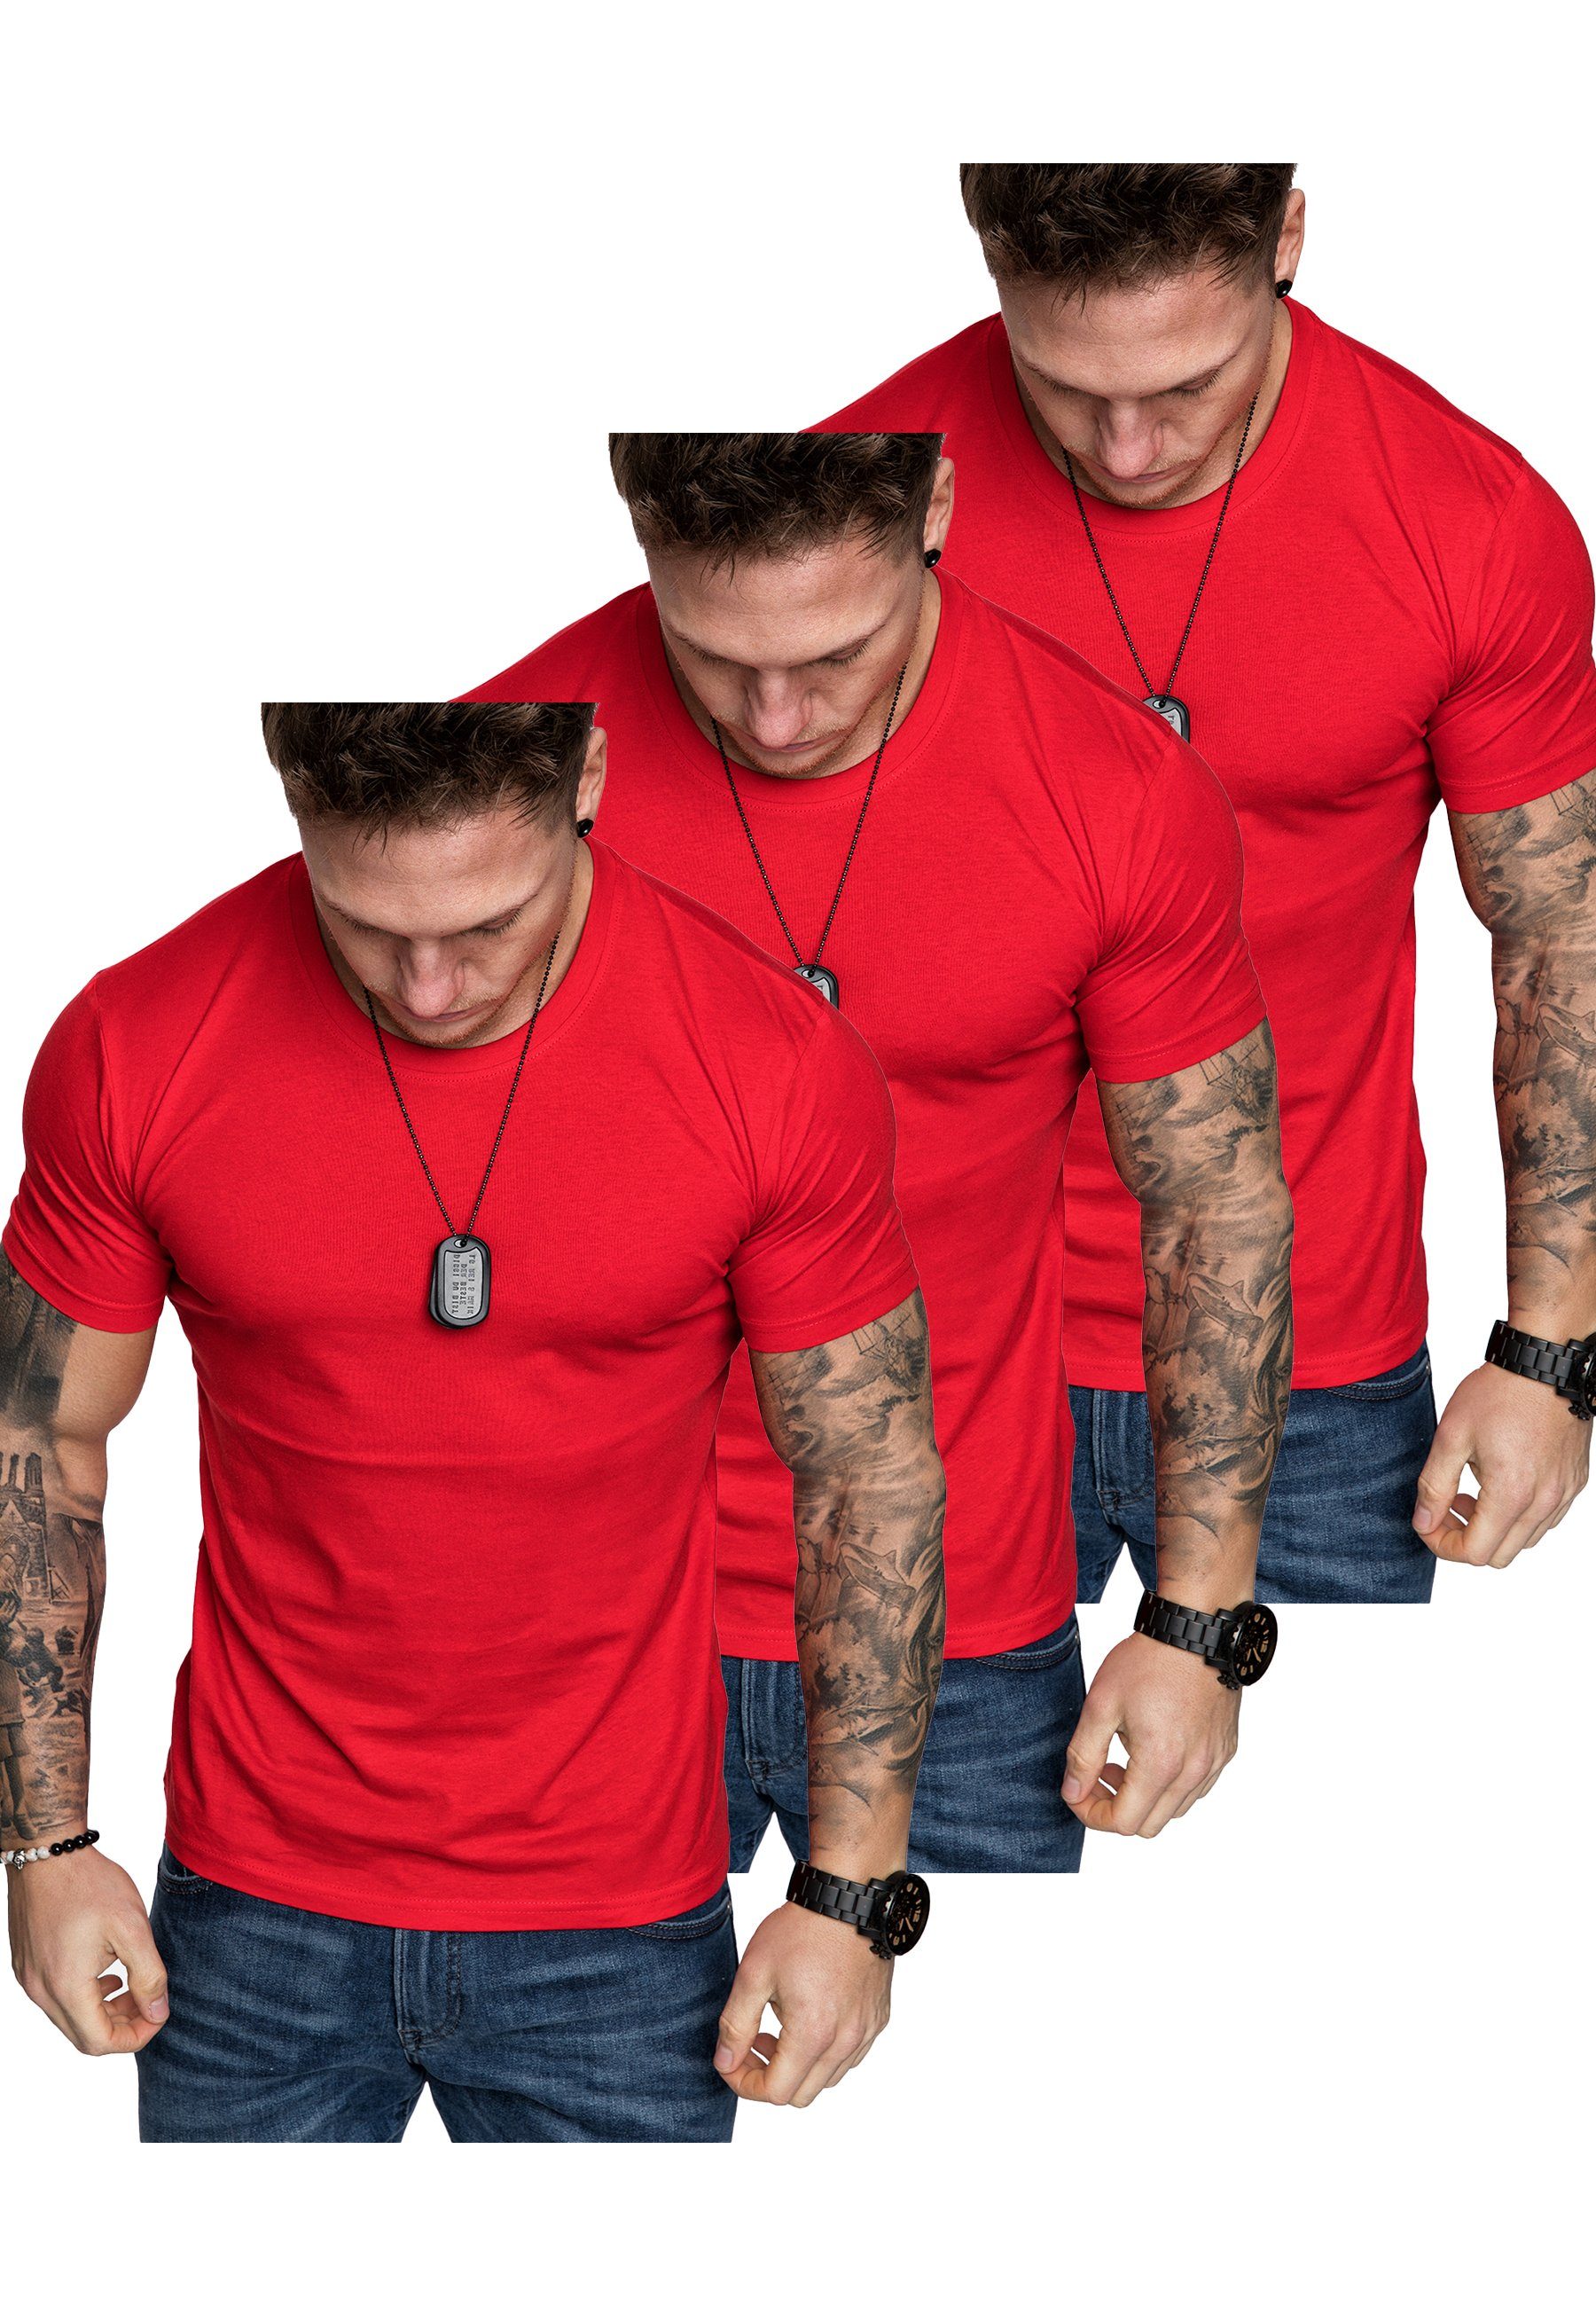 T-Shirts T-Shirt Rundhalsausschnitt (3er-Pack) 3. Amaci&Sons mit Basic 3er-Pack LANCASTER Herren T-Shirt Oversize Rot) (3x